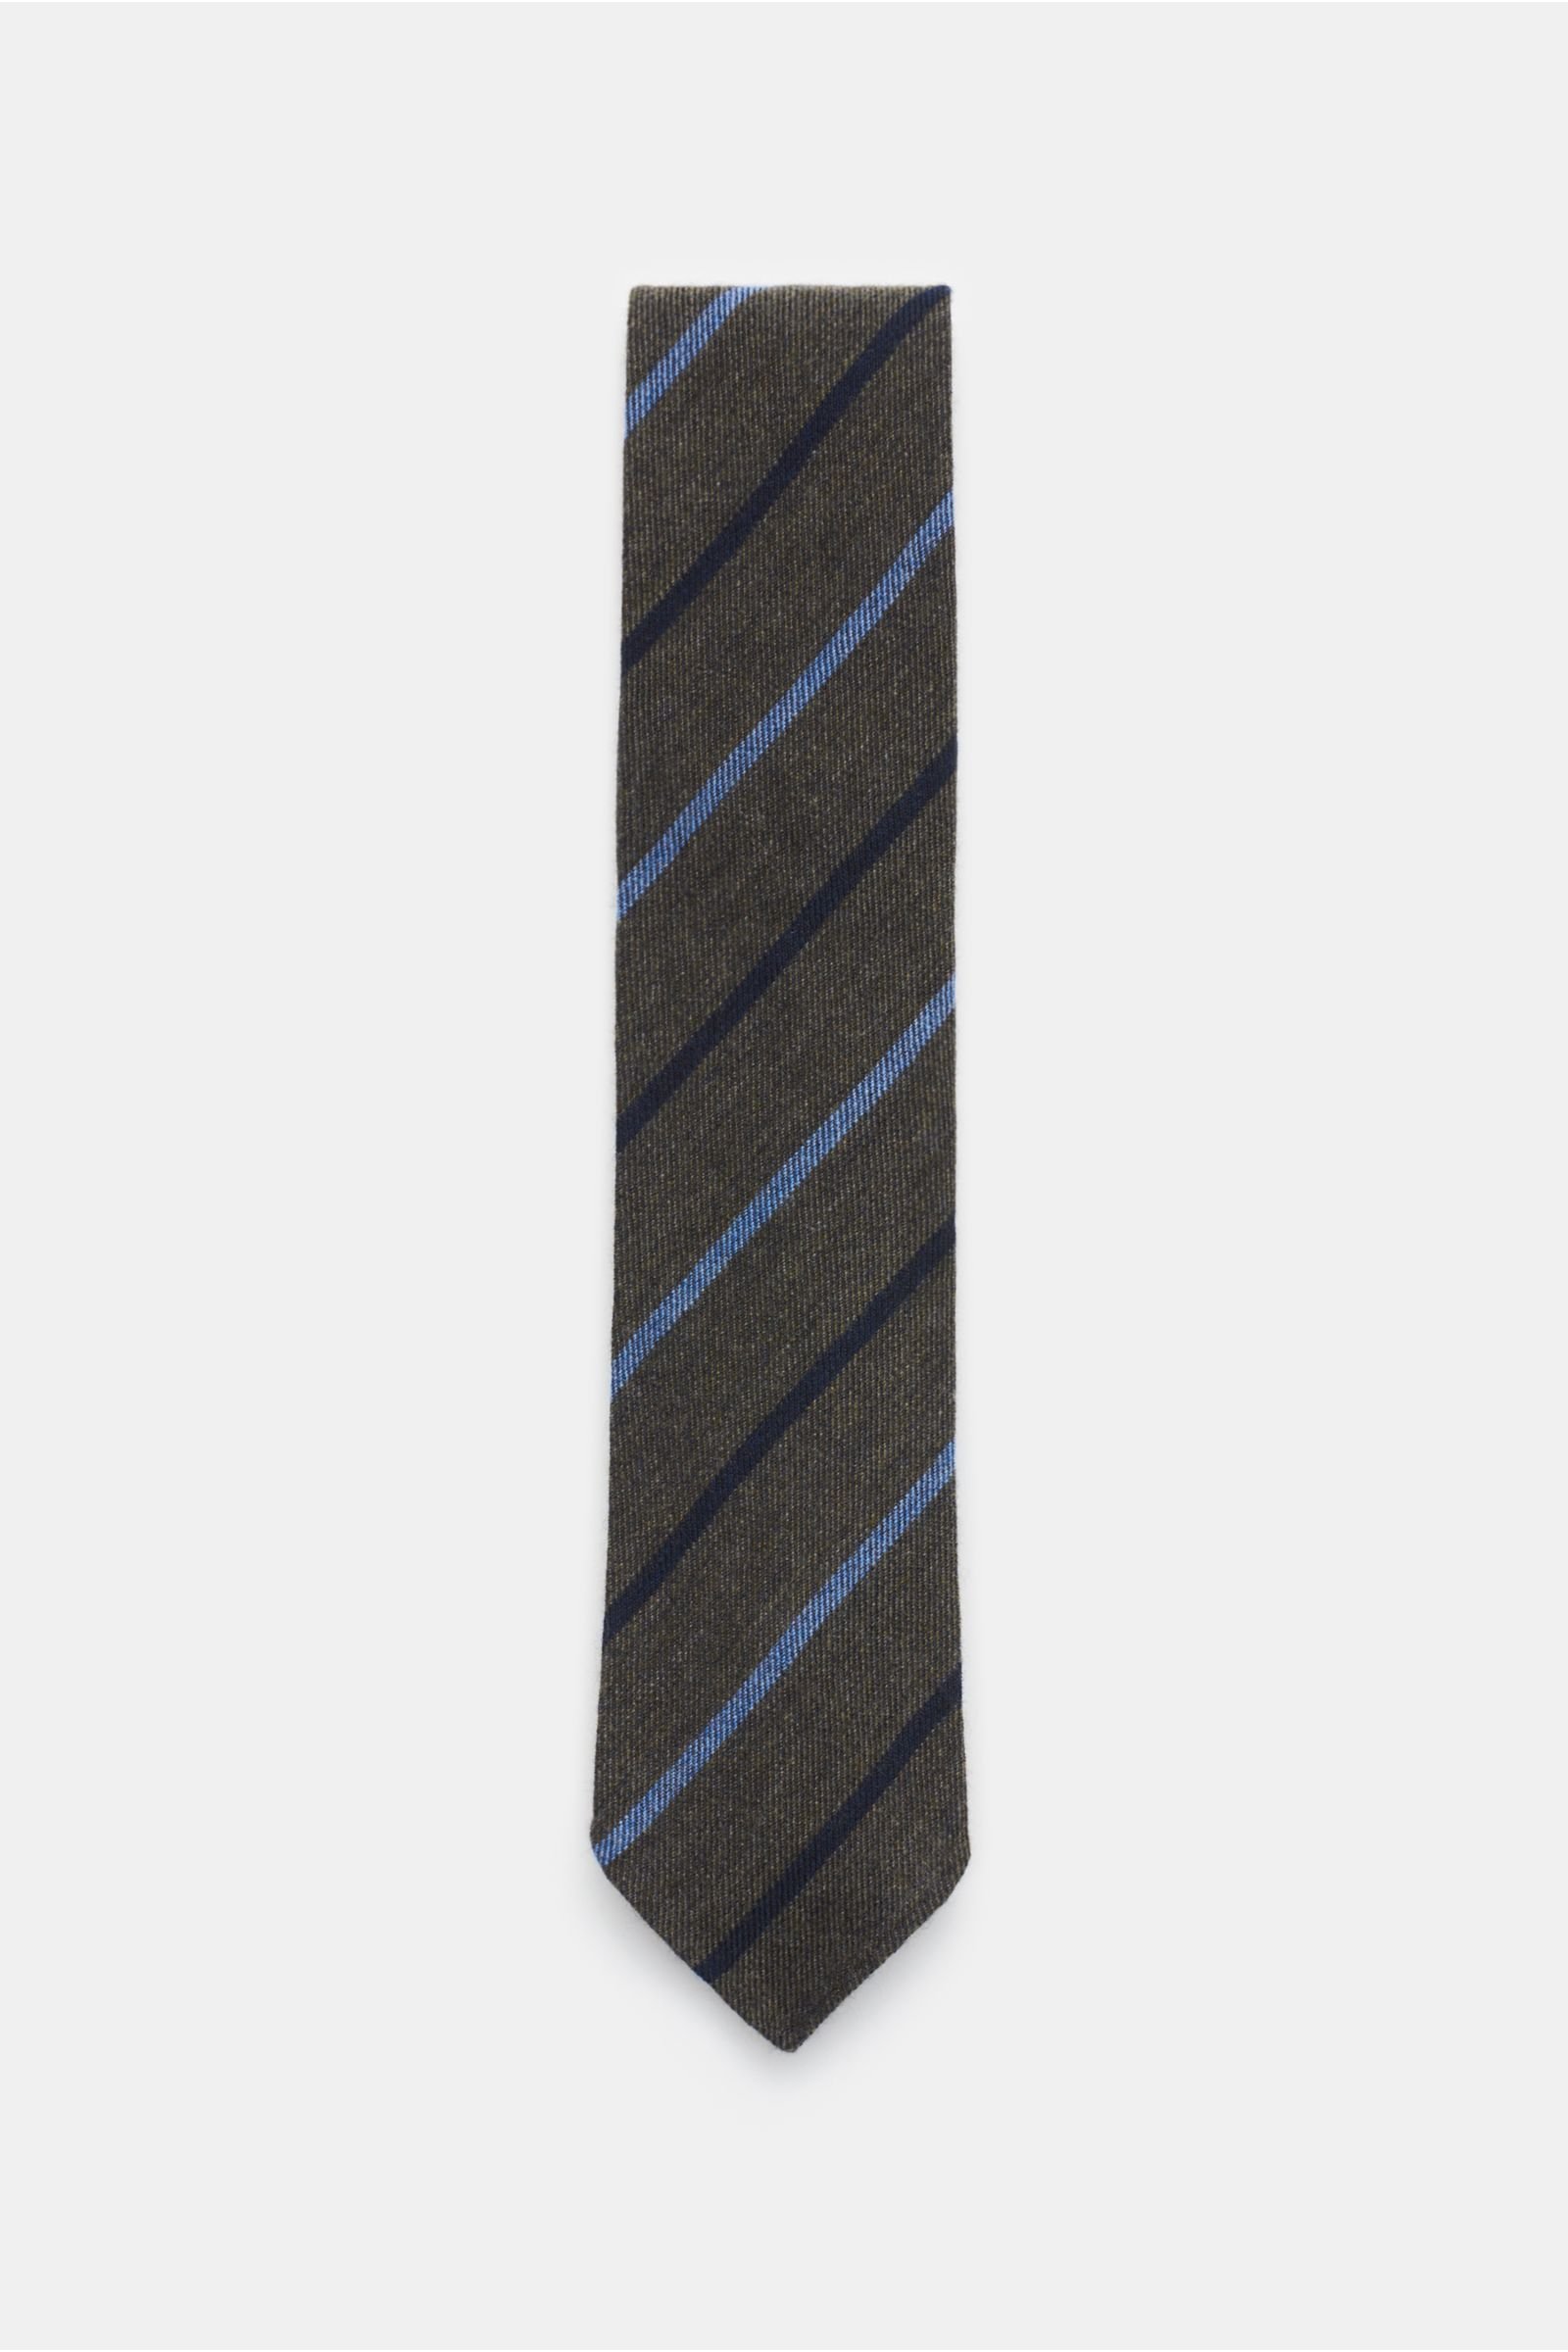 Cashmere Krawatte dunkelgrau/blau gestreift